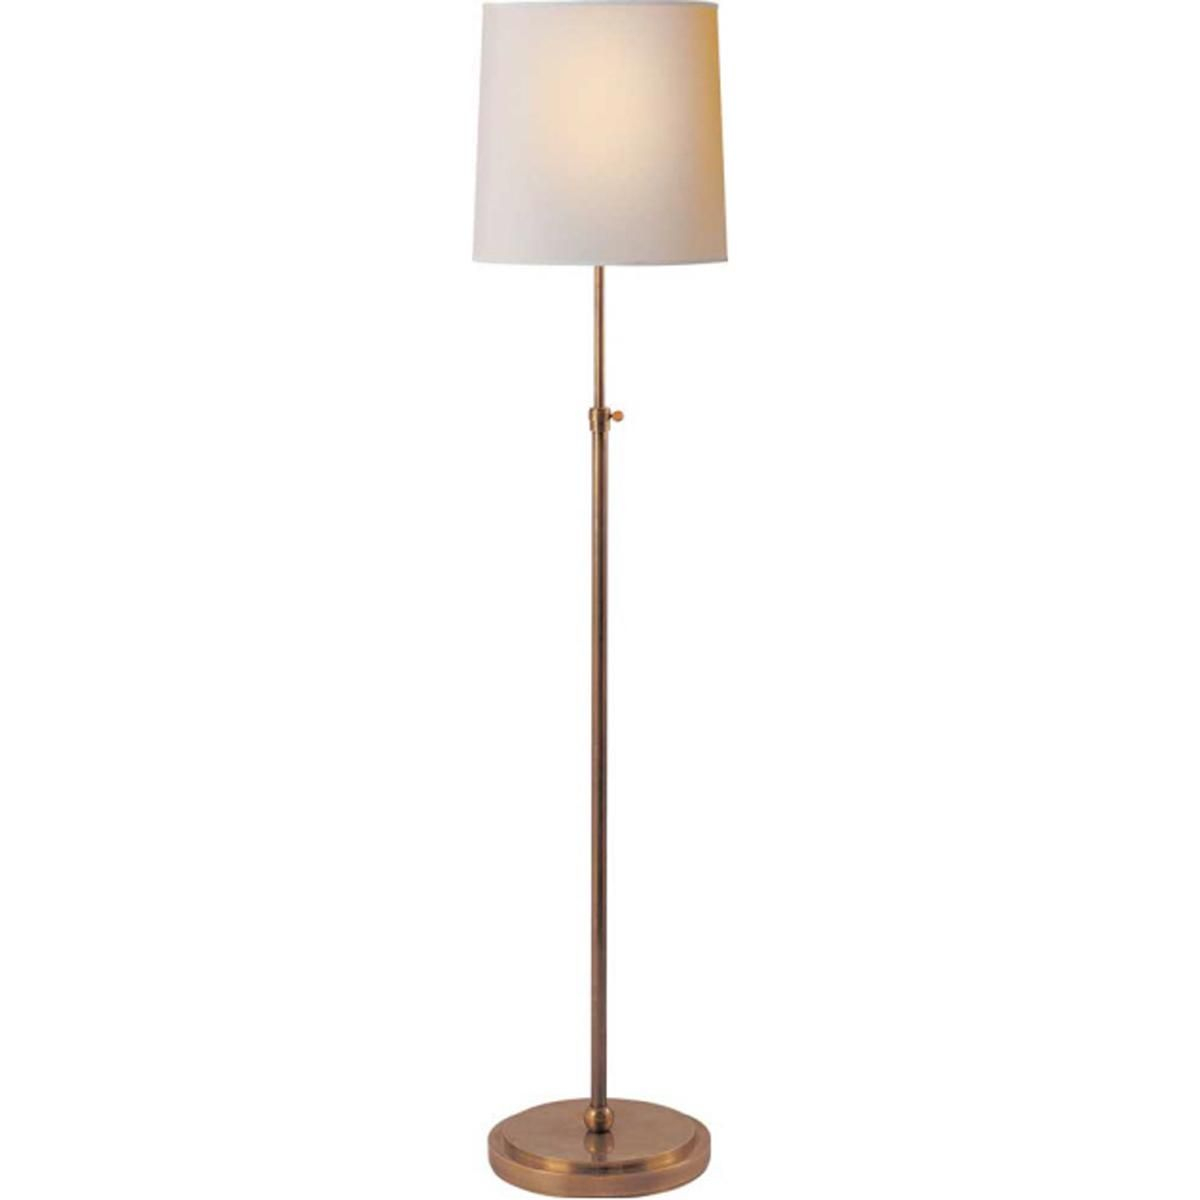 Soho Adjustable Floor Lamp Decorative Floor Lamps inside sizing 1200 X 1200